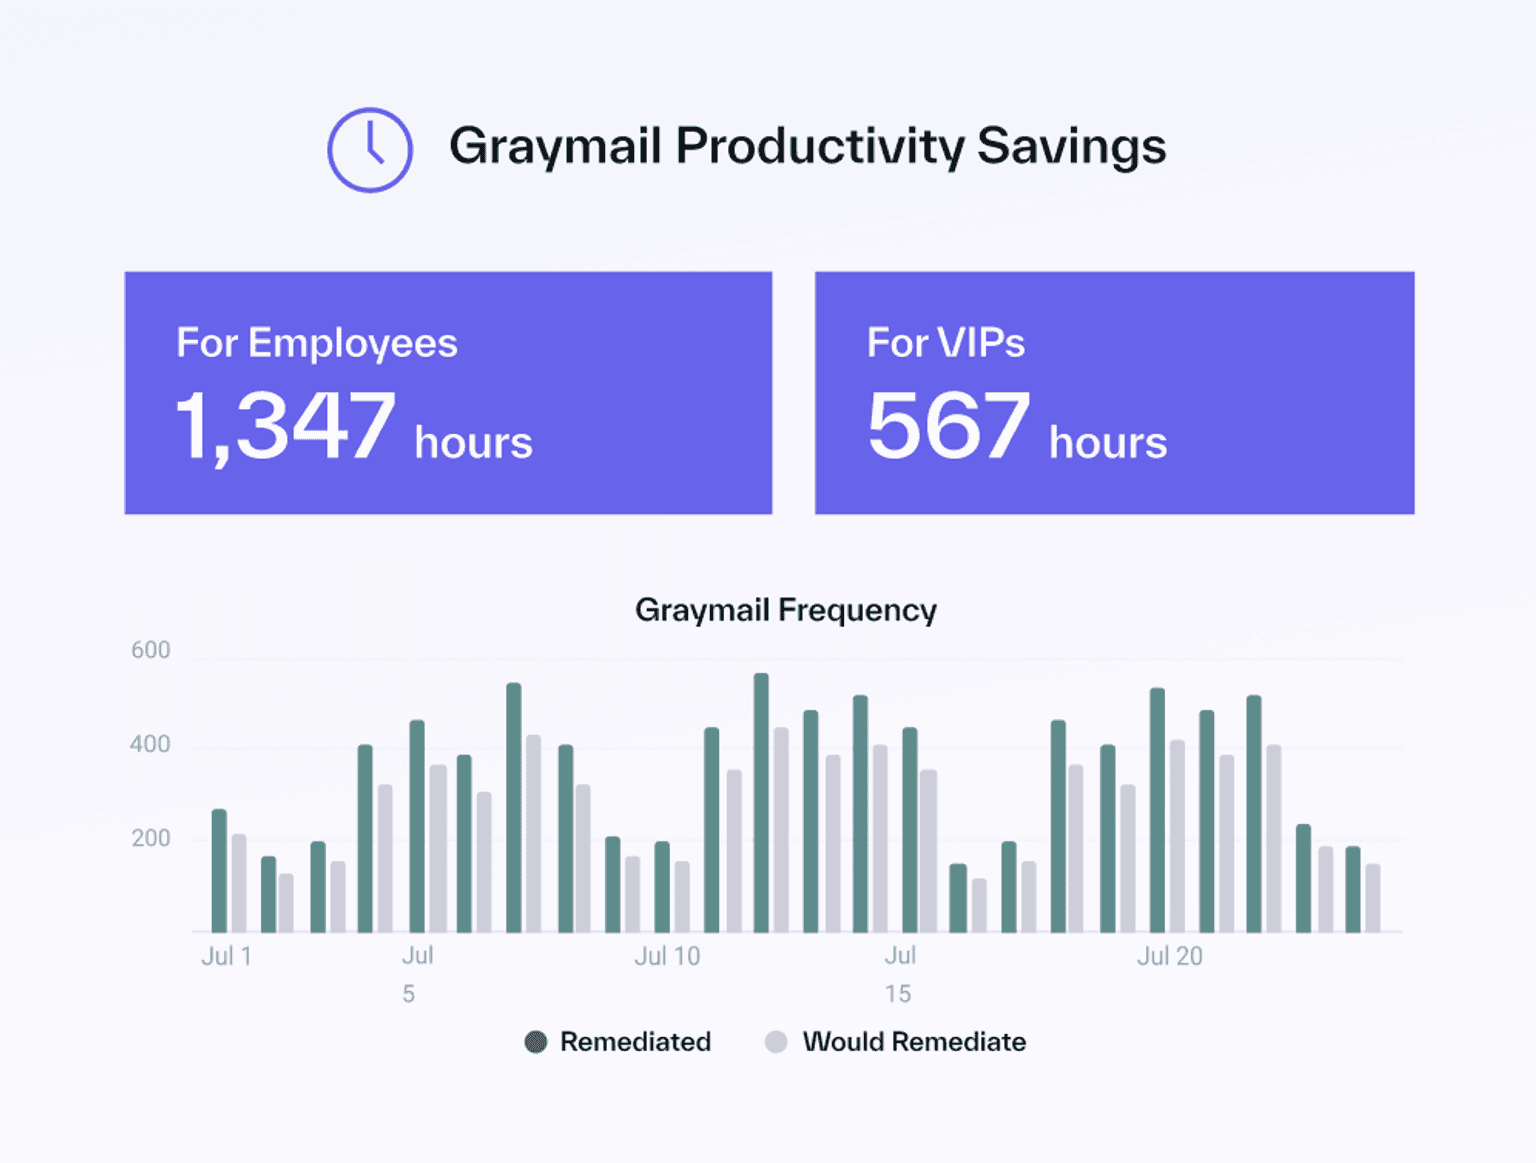 Graymail Productivity Savings